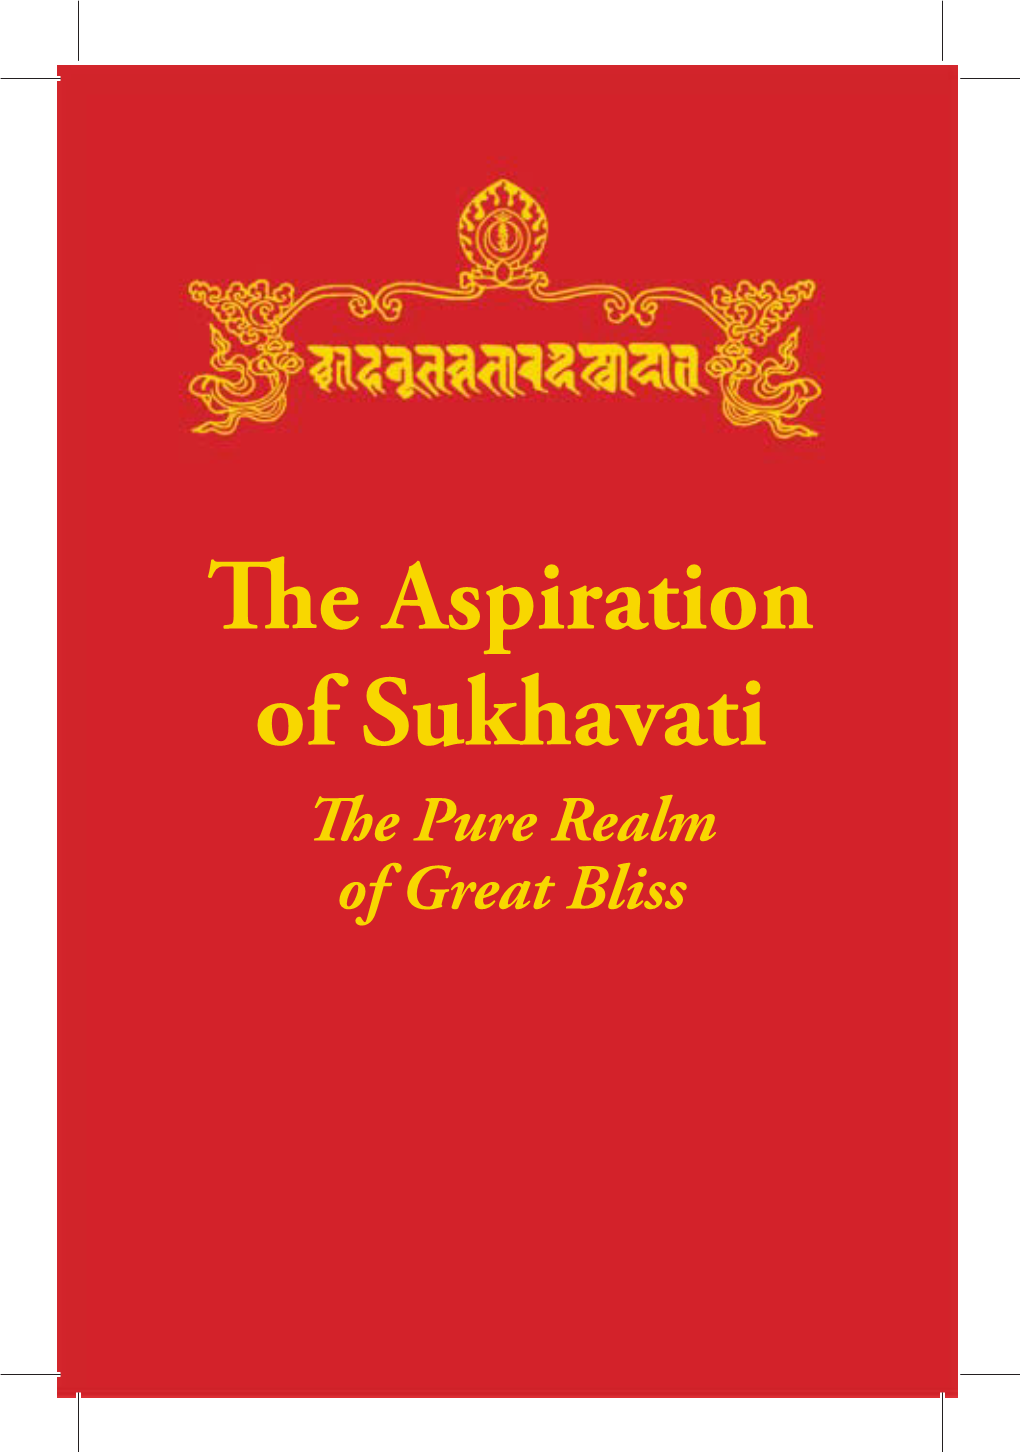 The Aspiration of Sukhavati